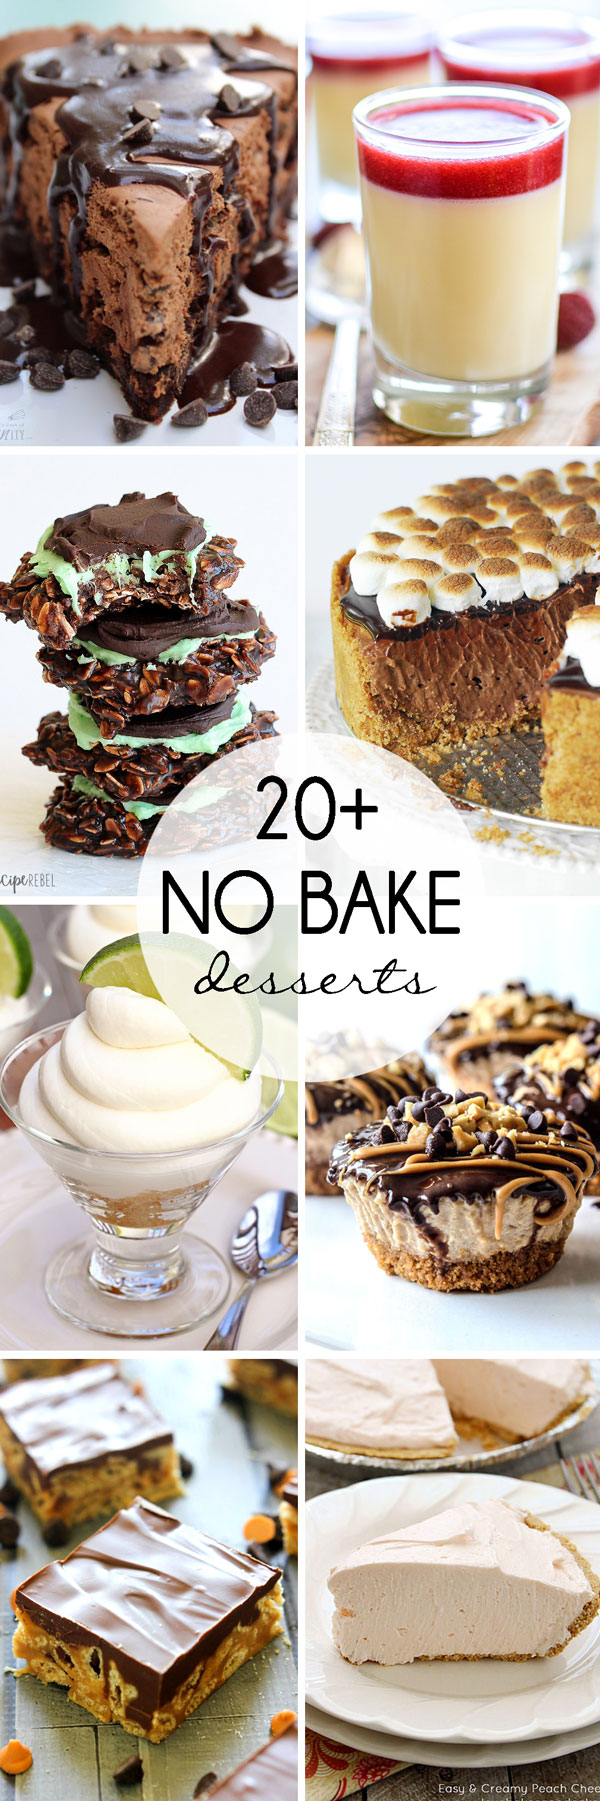 20+ No Bake Desserts.